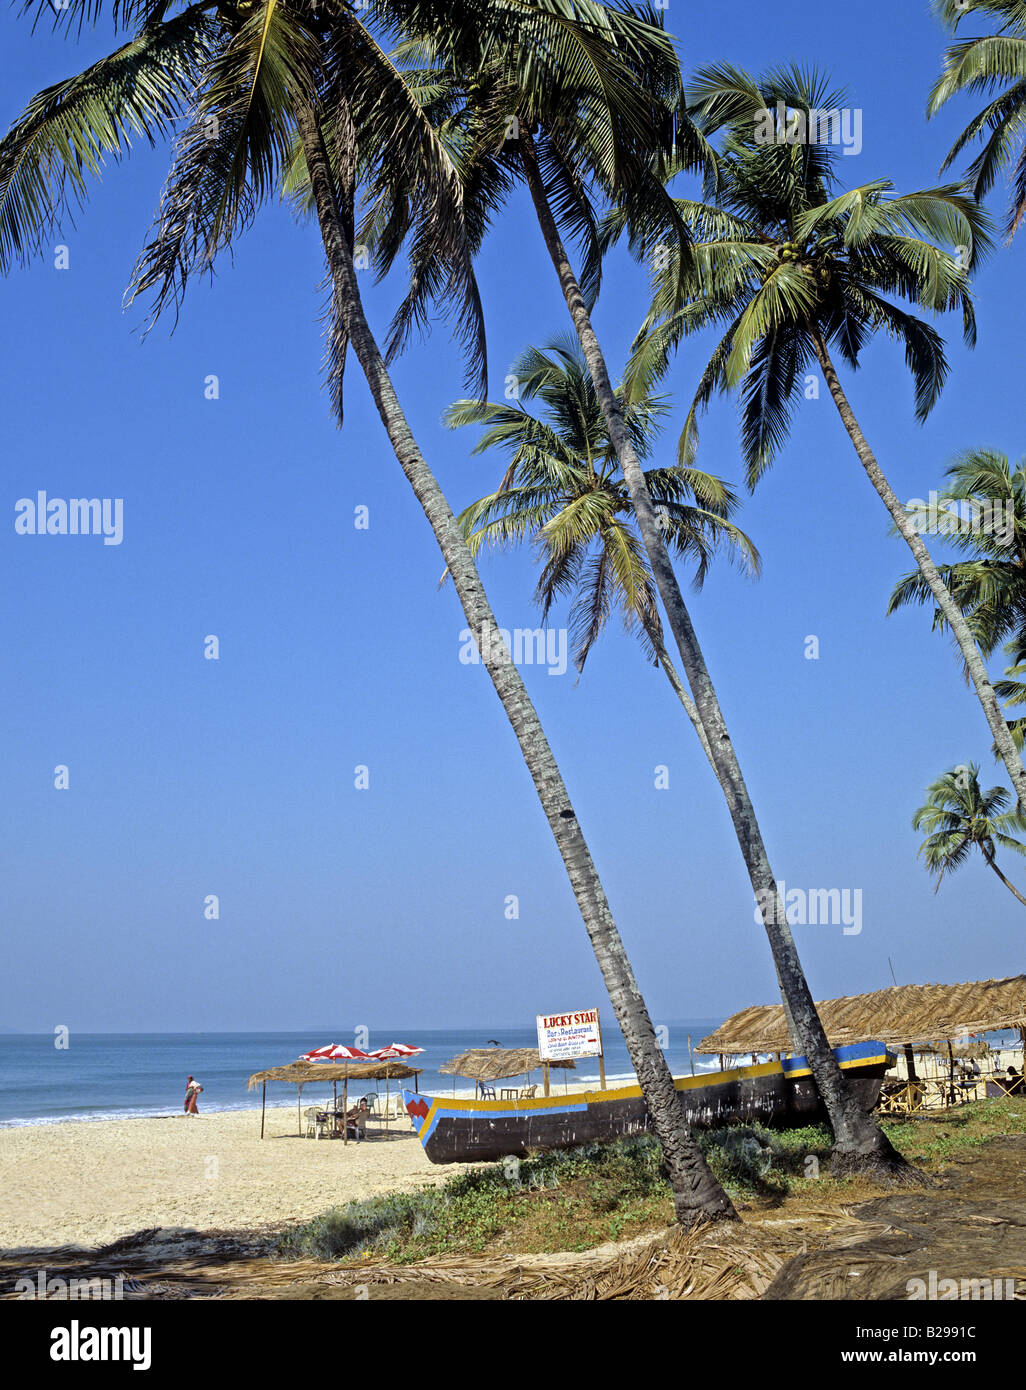 Colva Beach Goa State India Date 15 06 2008 Ref ZB548 115573 0064 COMPULSORY CREDIT World Pictures Photoshot Stock Photo